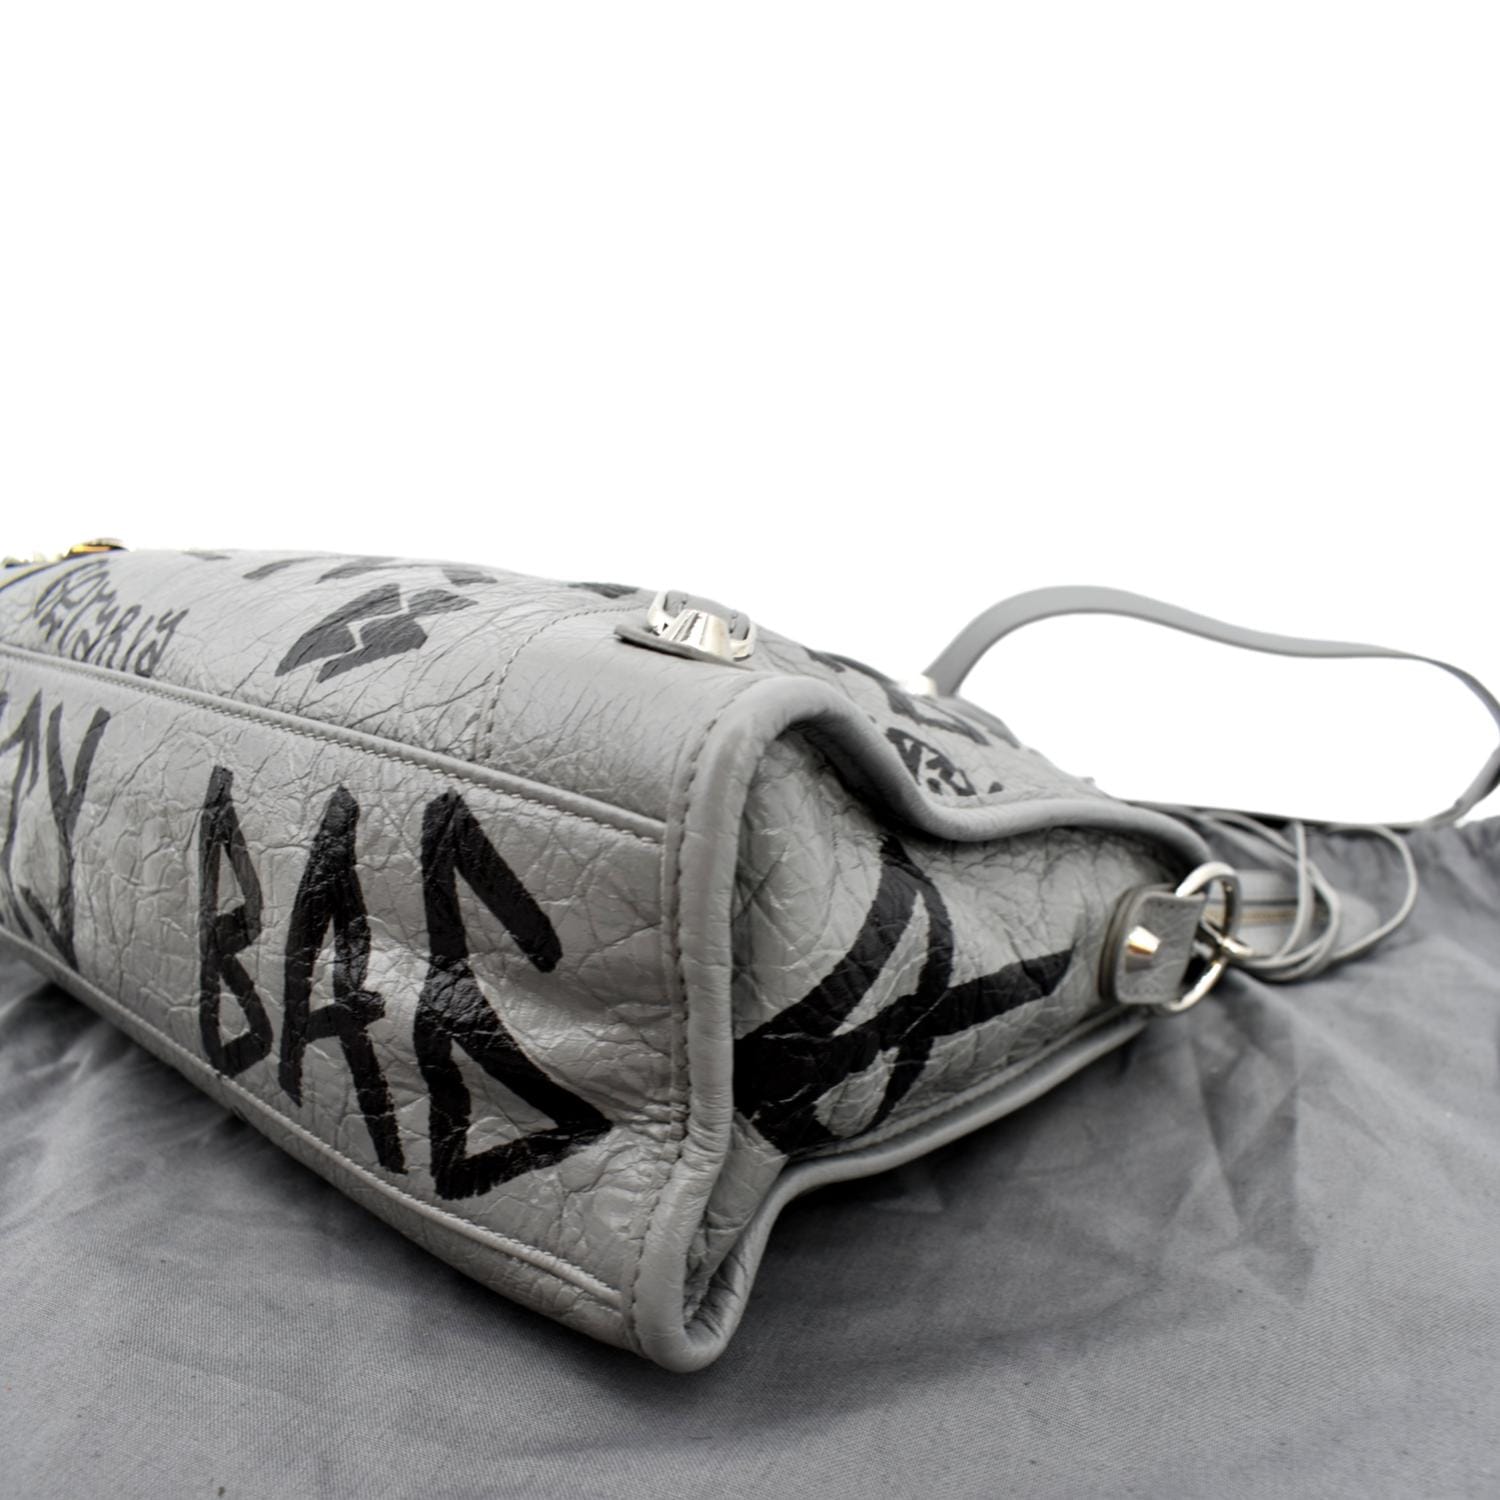 BALENCIAGA Graffiti Classic City Small Leather Top Handle Shoulder Bag